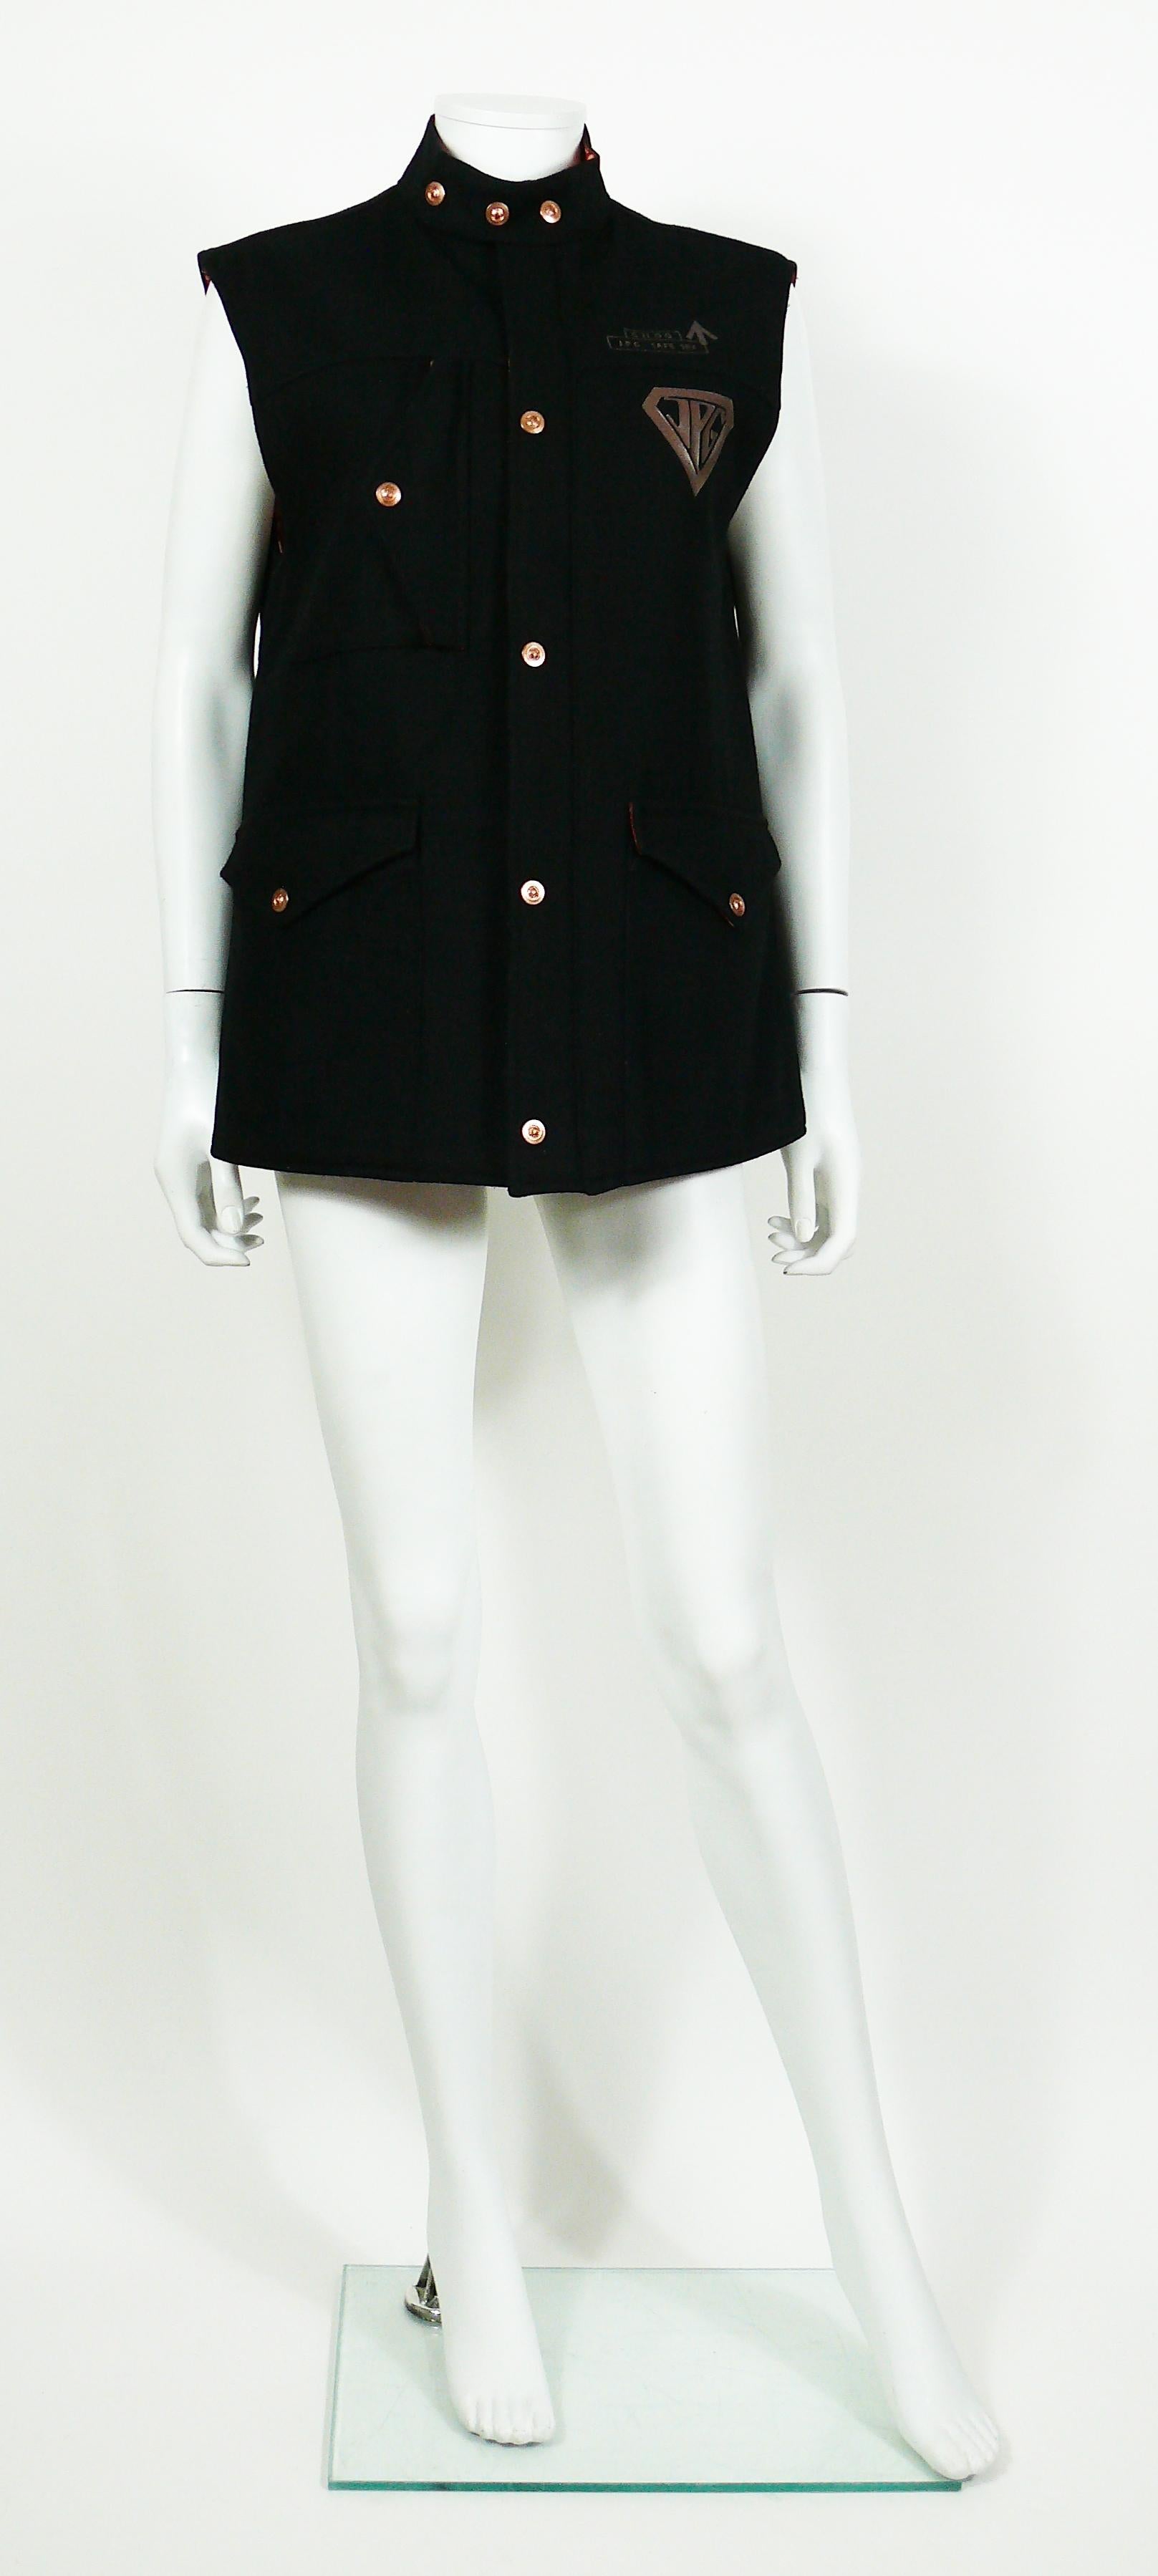 Jean Paul Gaultier Vintage Unisex Safe Sex Vest Size M In Good Condition For Sale In Nice, FR